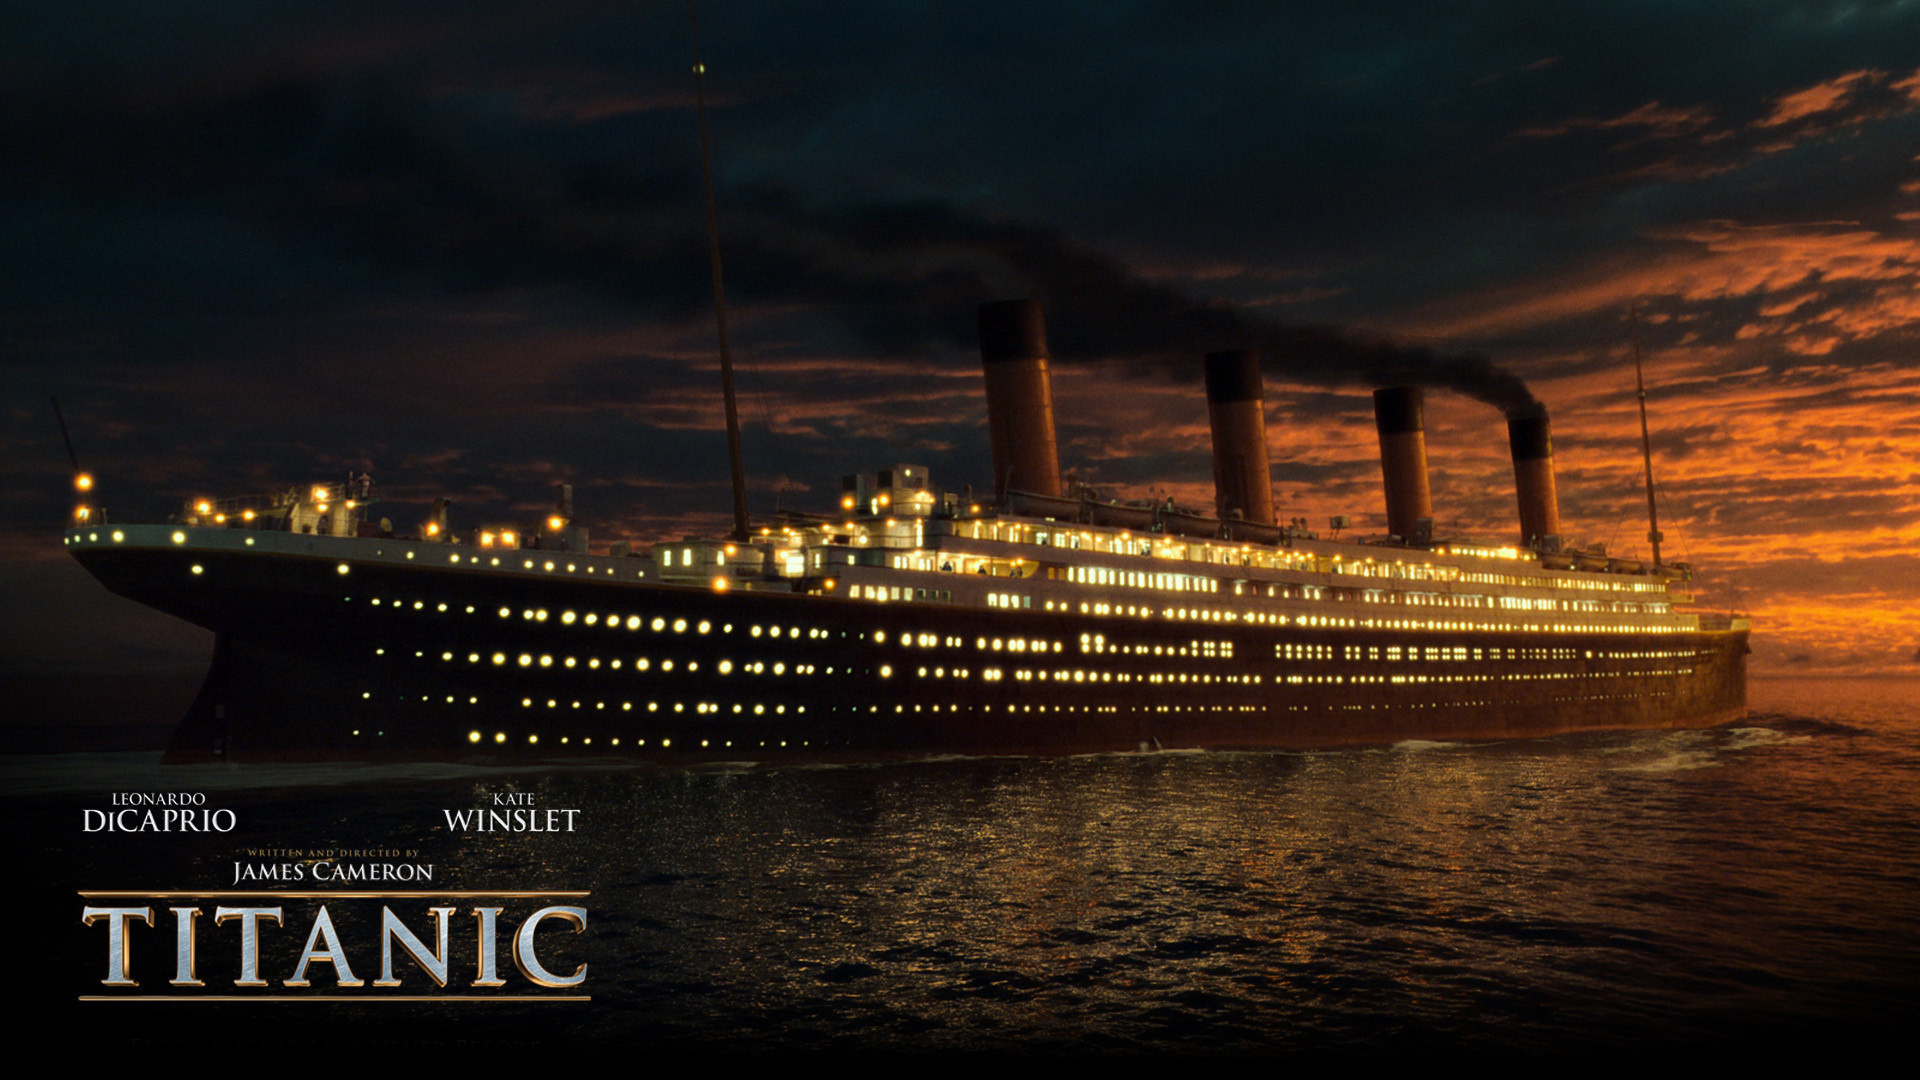 Titanic Sinking Poster #14674 Wallpaper | Viewallpaper.com